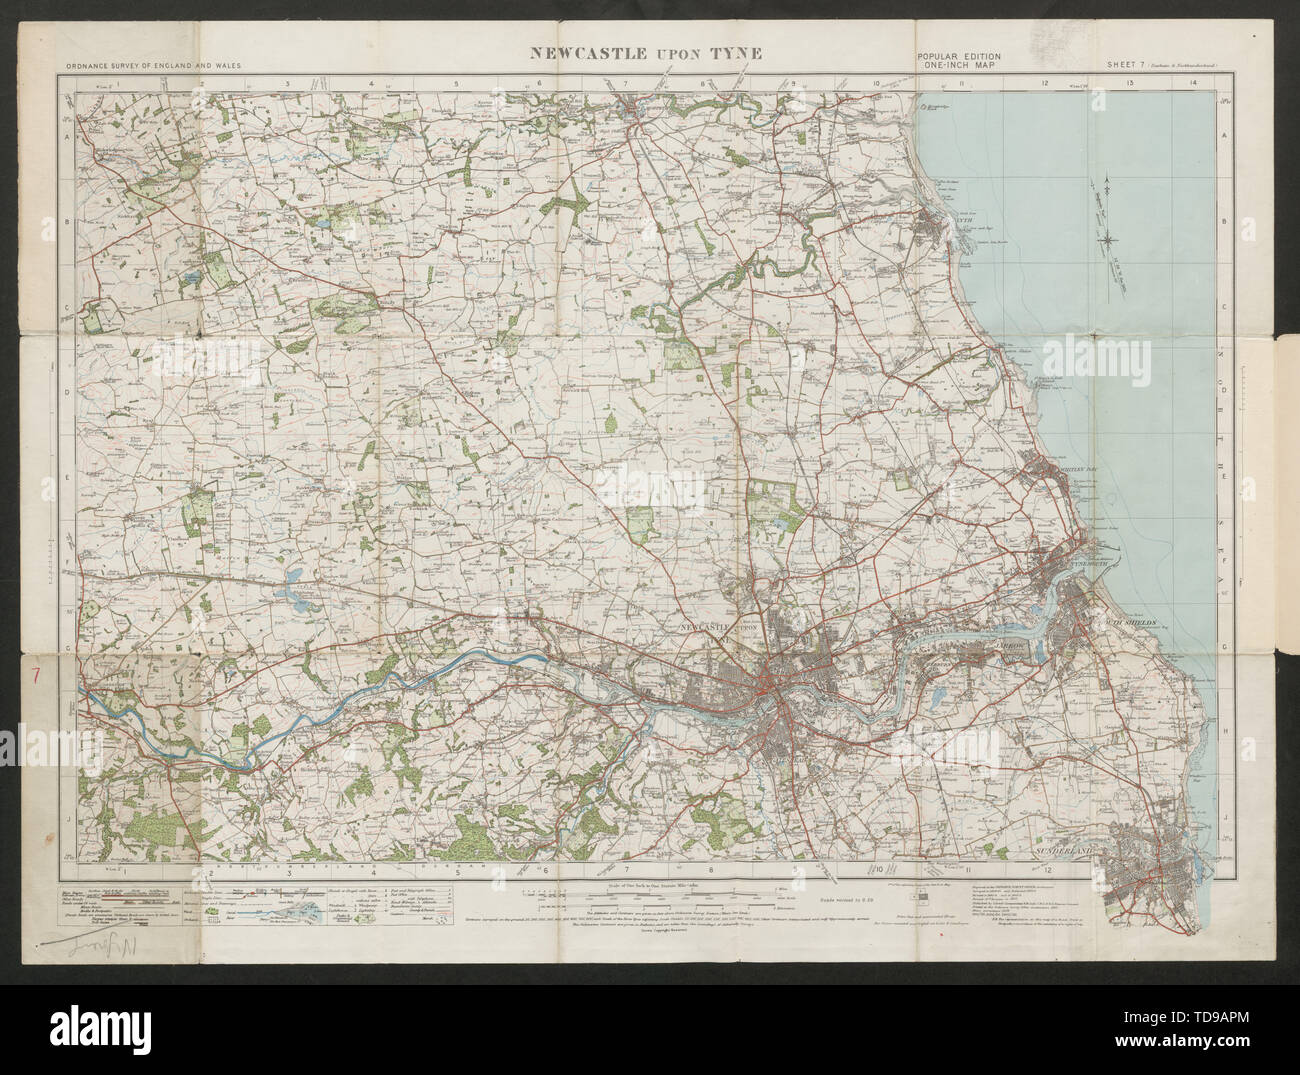 NEWCASTLE Upon Tyne, feuille 7. Tyneside, Sunderland. 1932 old Ordnance Survey map Banque D'Images